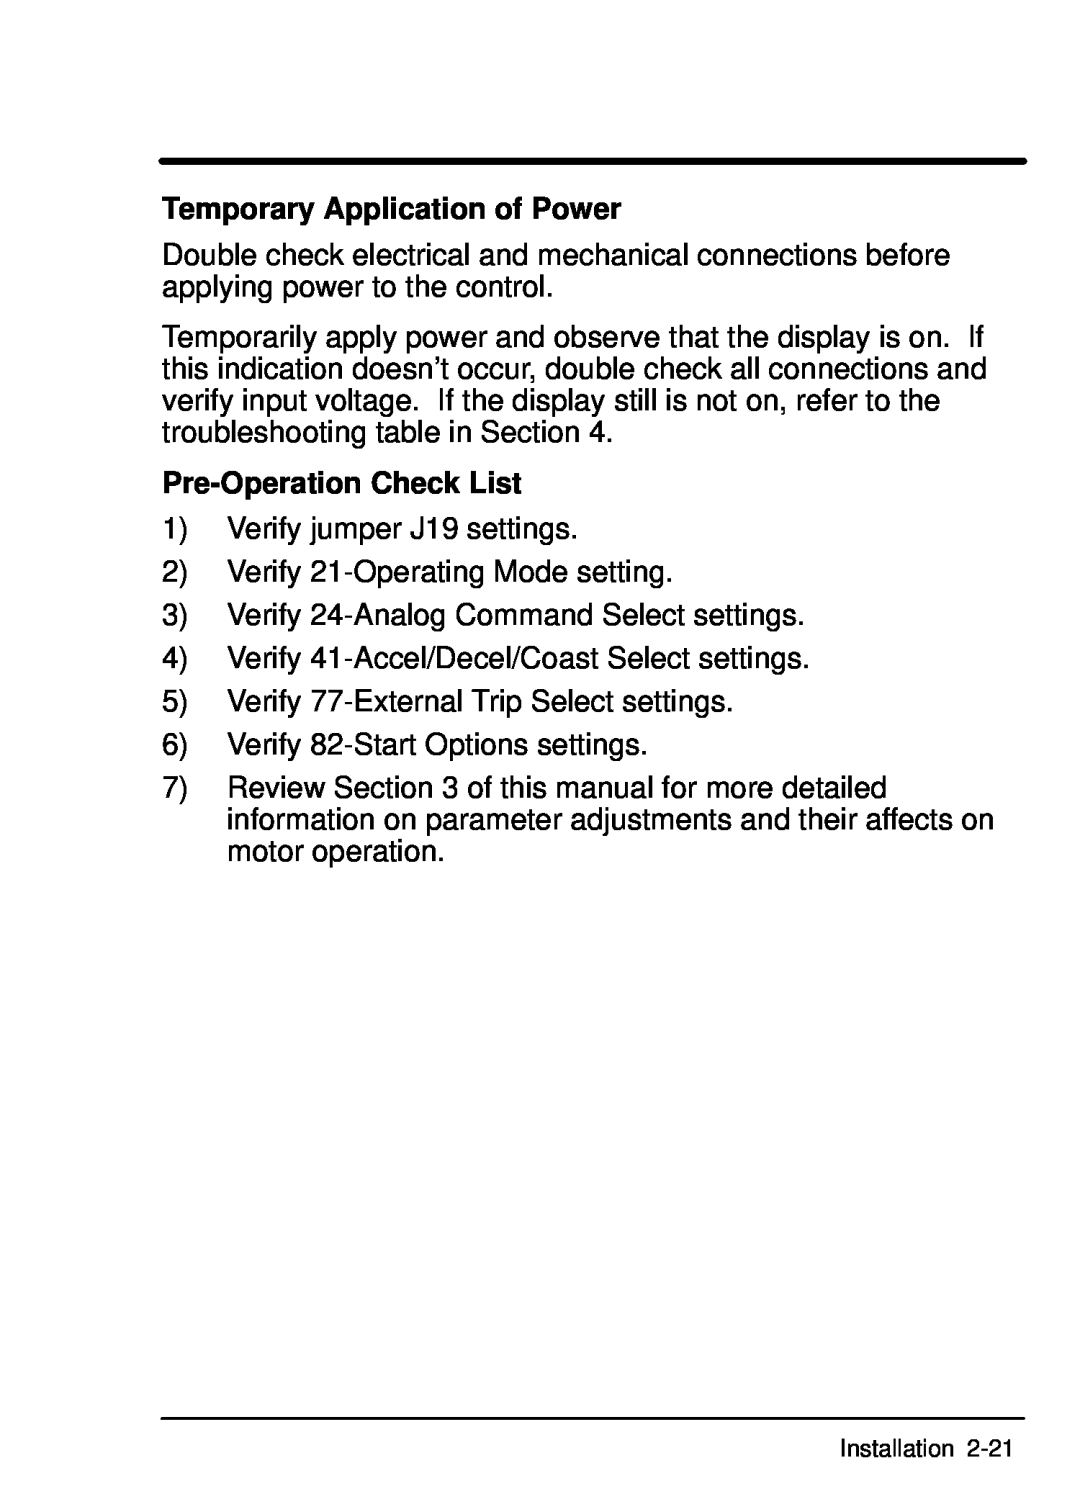 Baldor ID101F50-E manual Temporary Application of Power, Pre-Operation Check List 